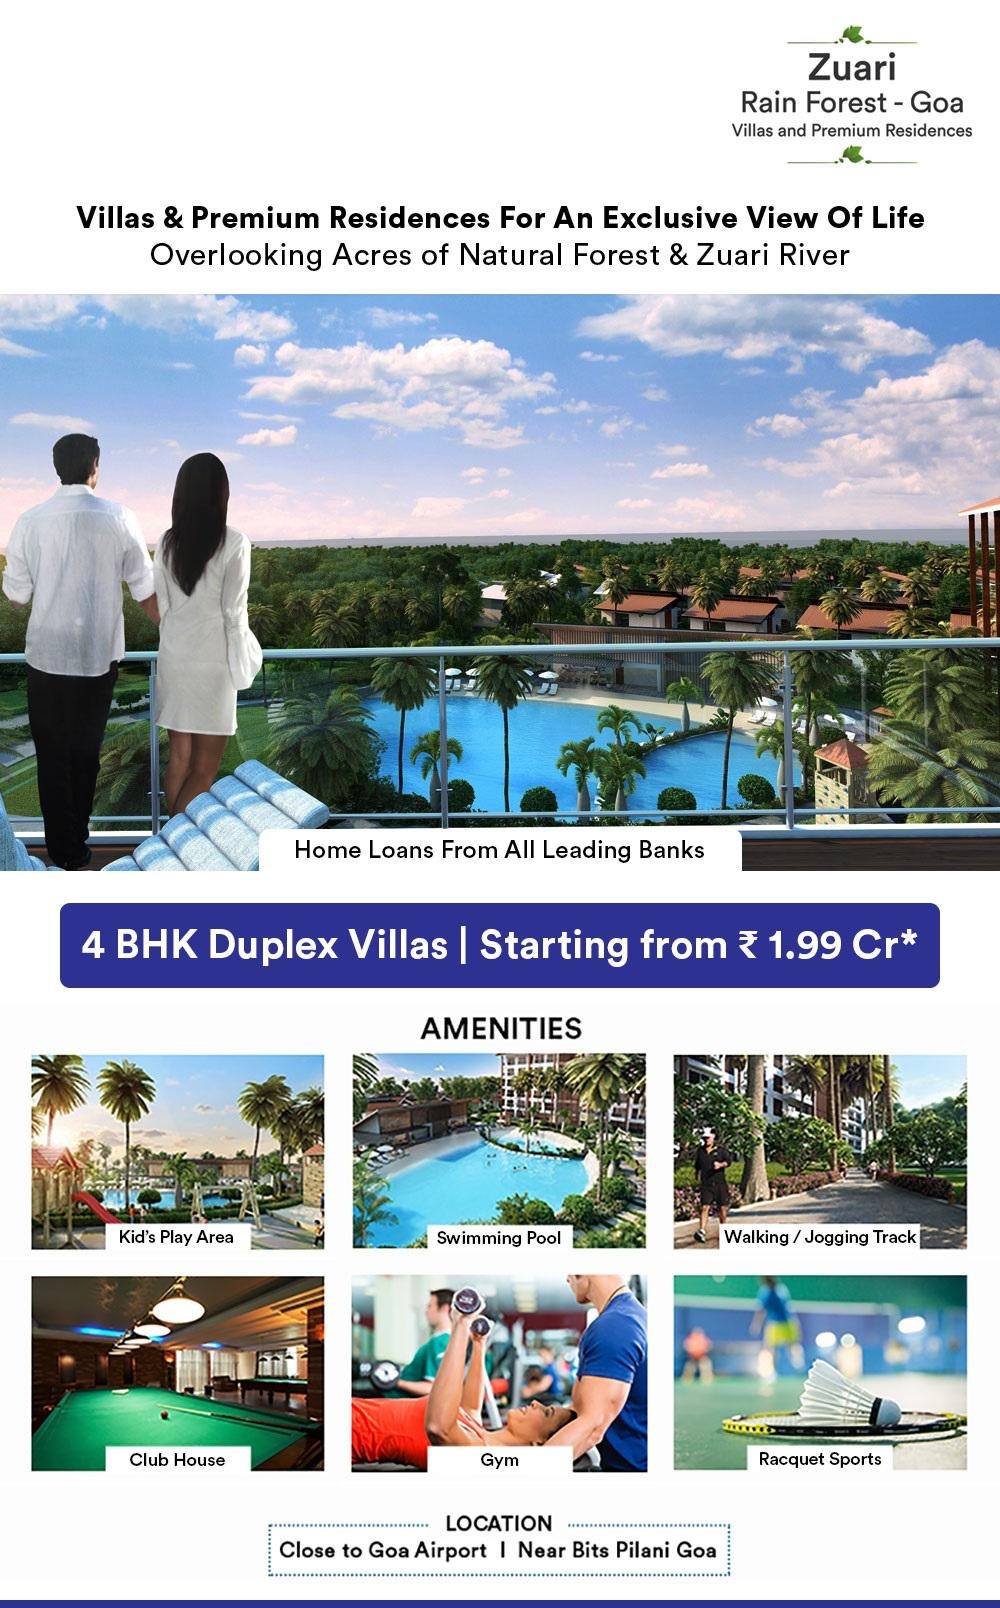 Presenting 4 bhk duplex villas at Rs 1.99 Cr. at Zuari Rain Forest in Goa Update